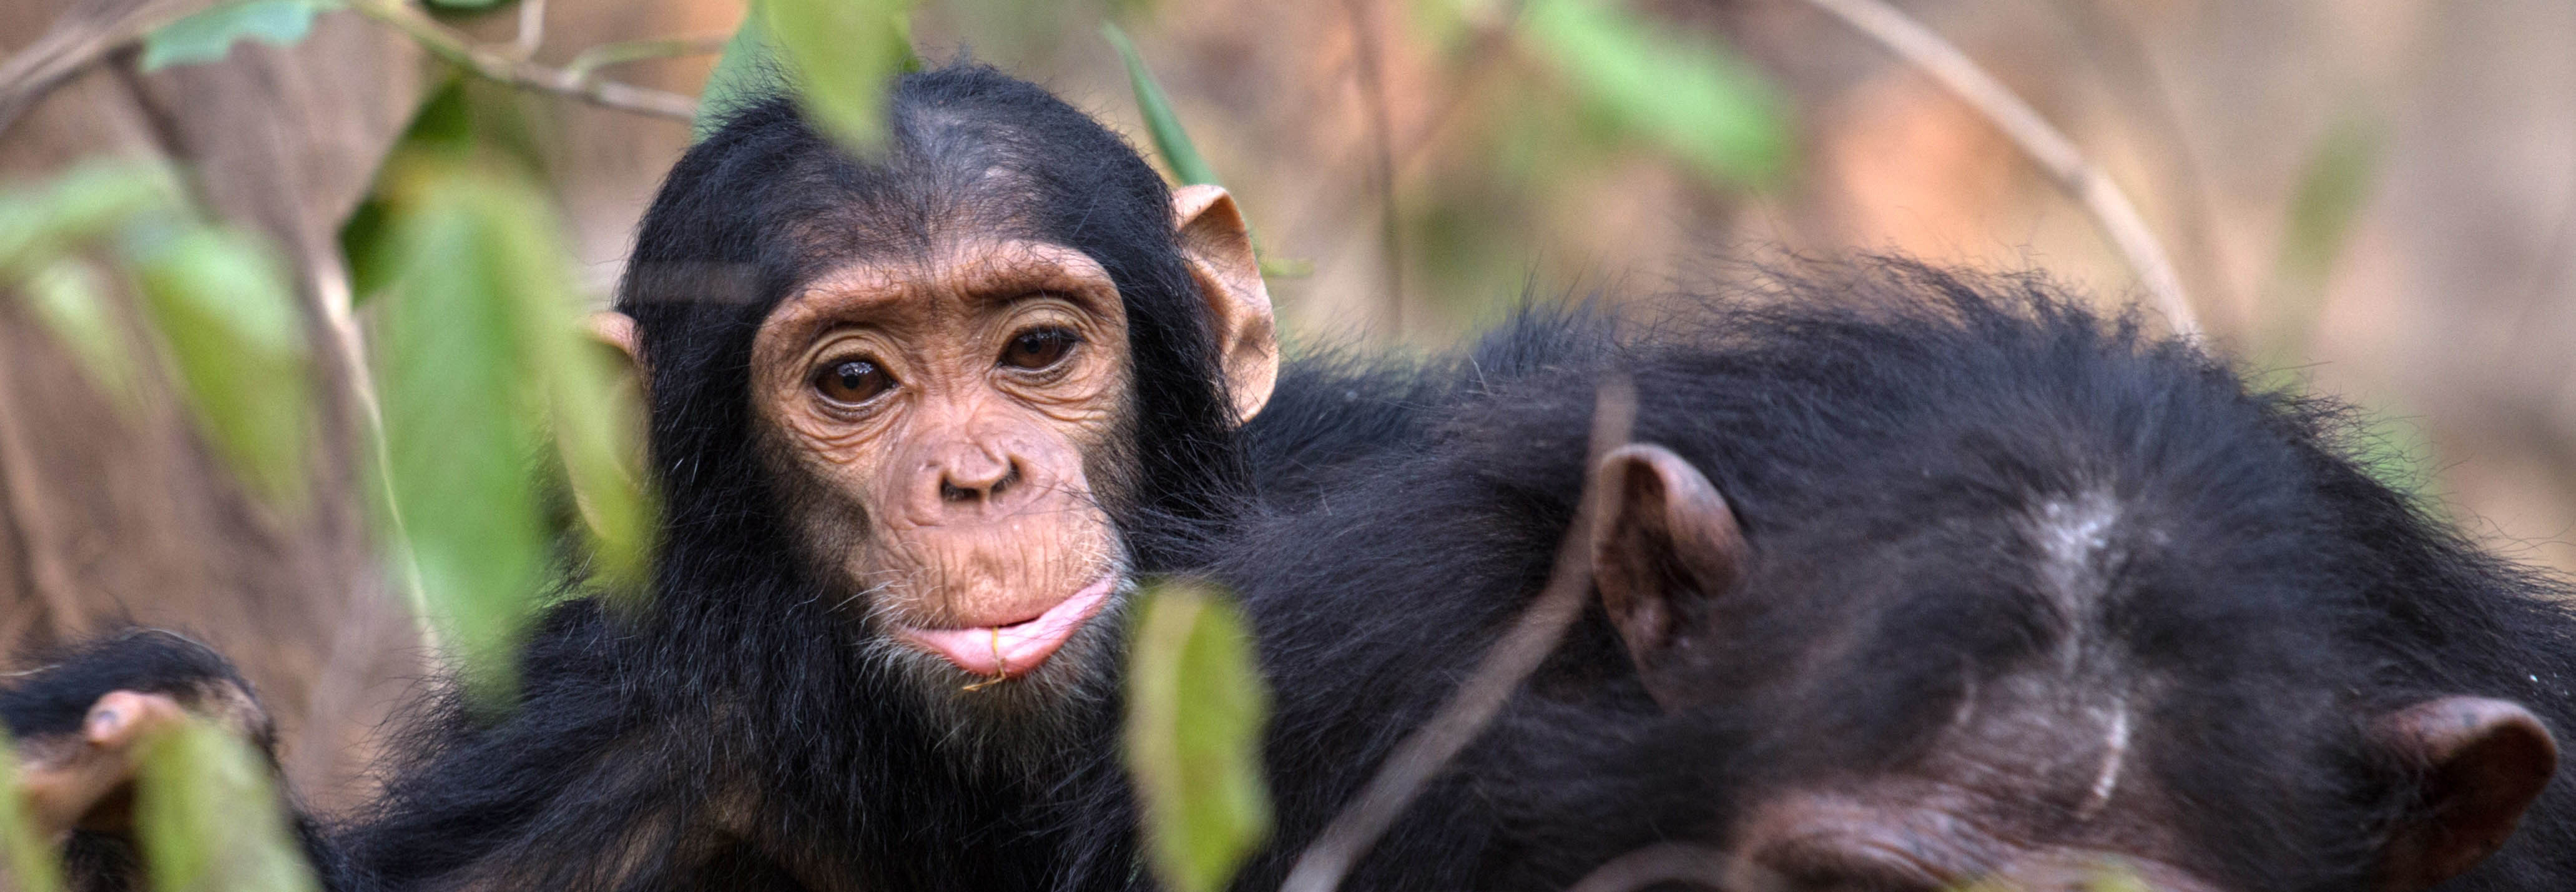 Baby chimpanzee, Gombe National park